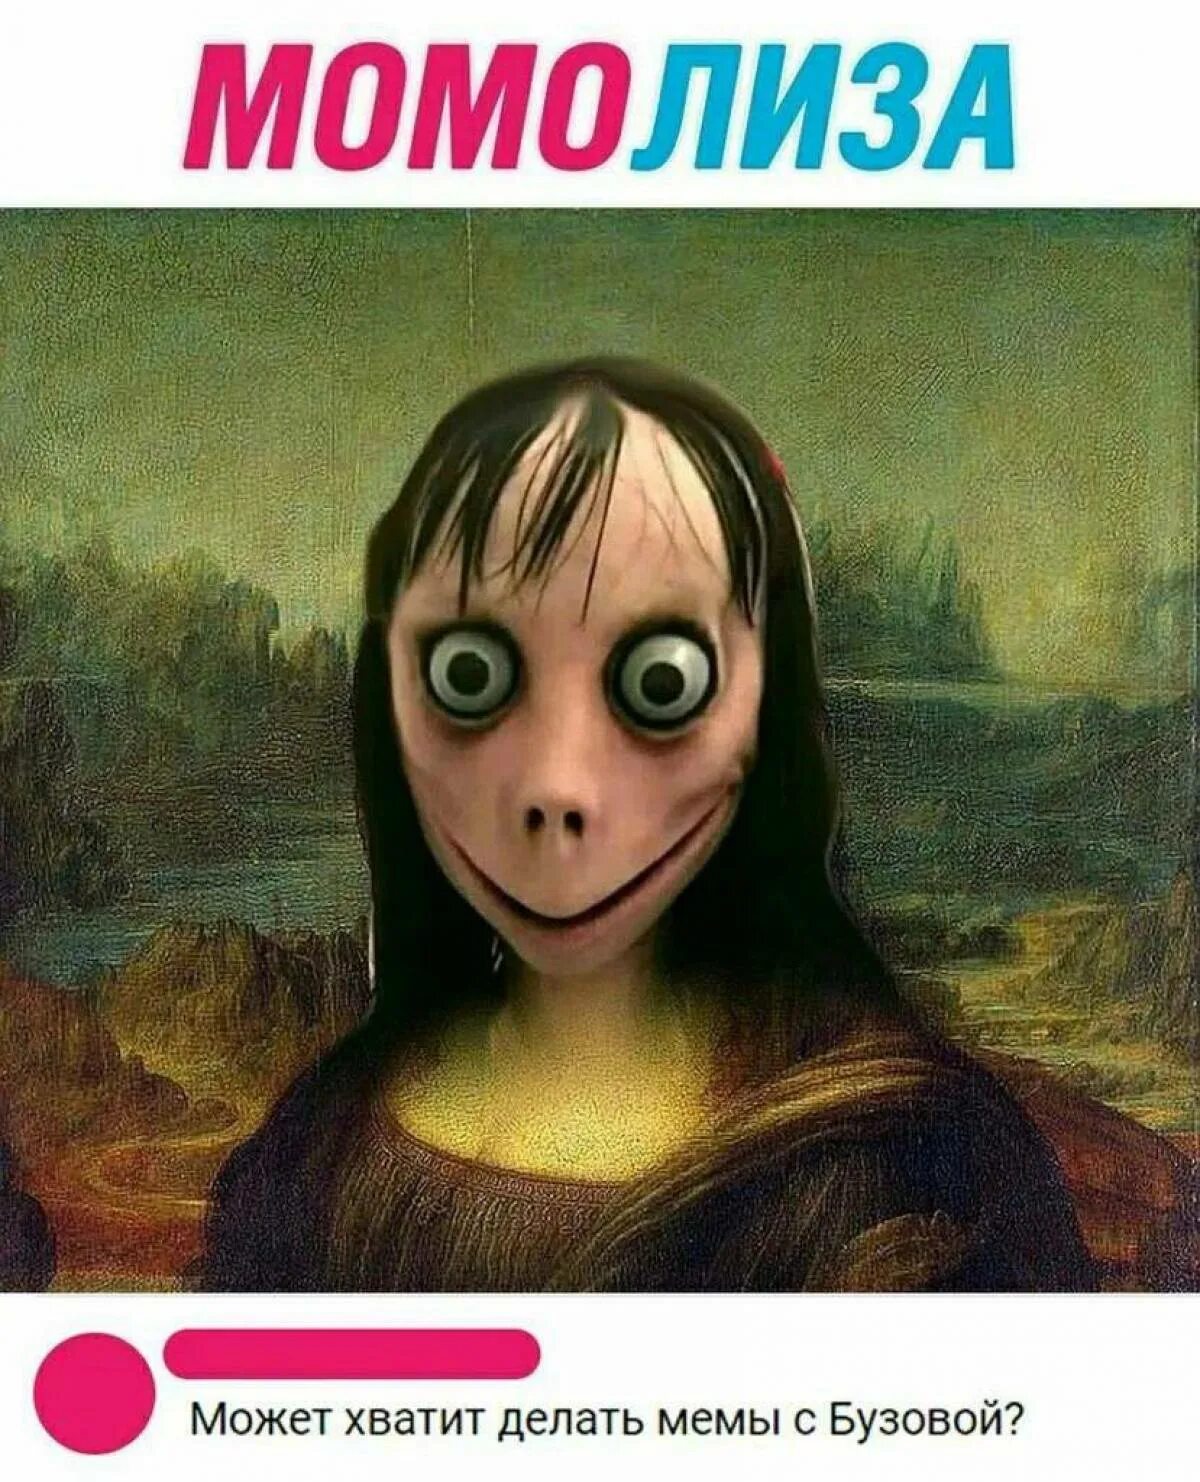 МОМО Momo. Как появилась момо